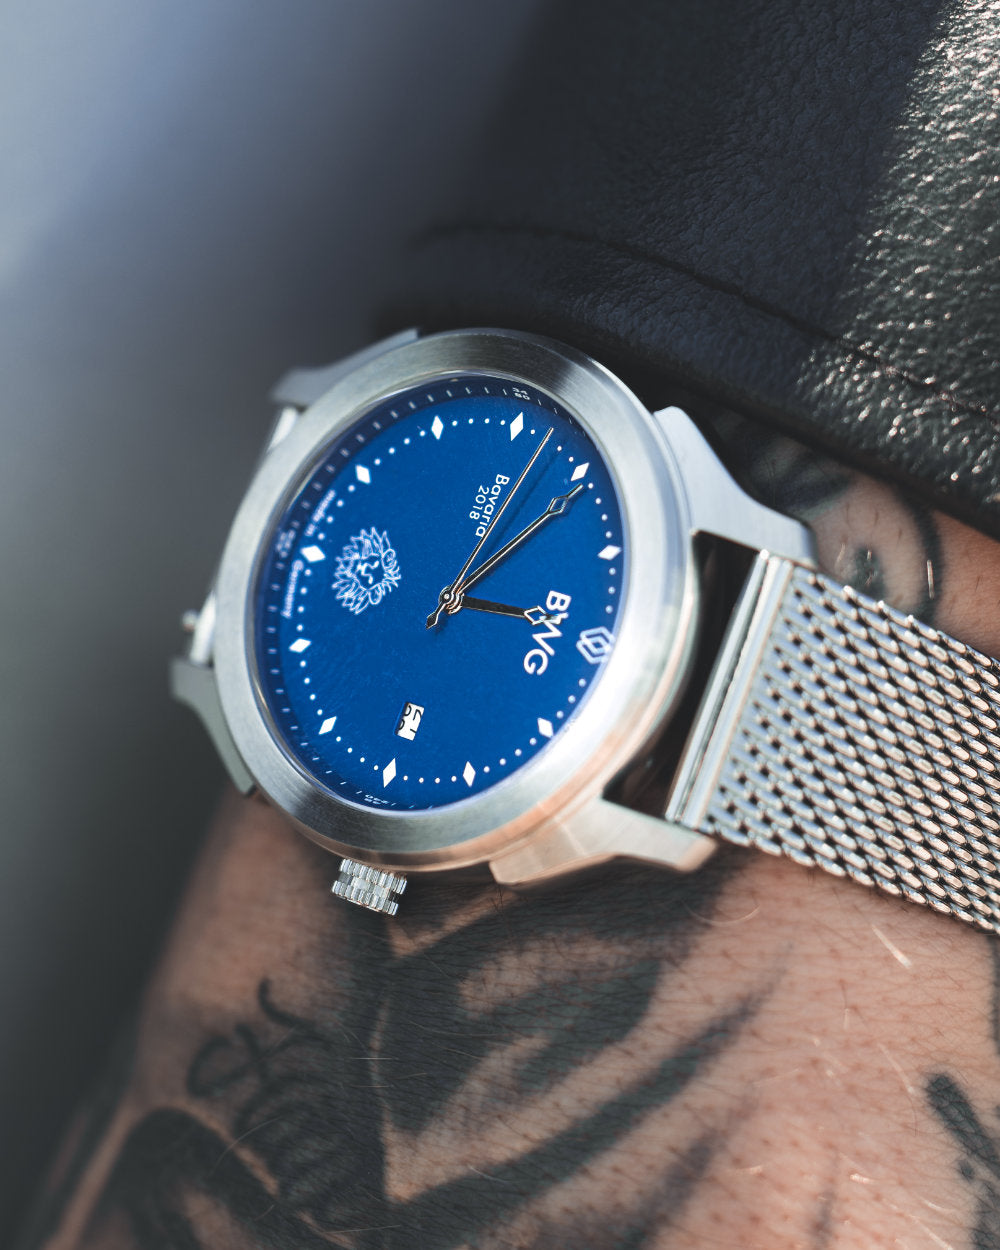 Man with tattooed hand wears a BWG Bavarian watch BAVARIA GOOD Design awarded Premium Quartz Watch with Swiss Ronda Movement